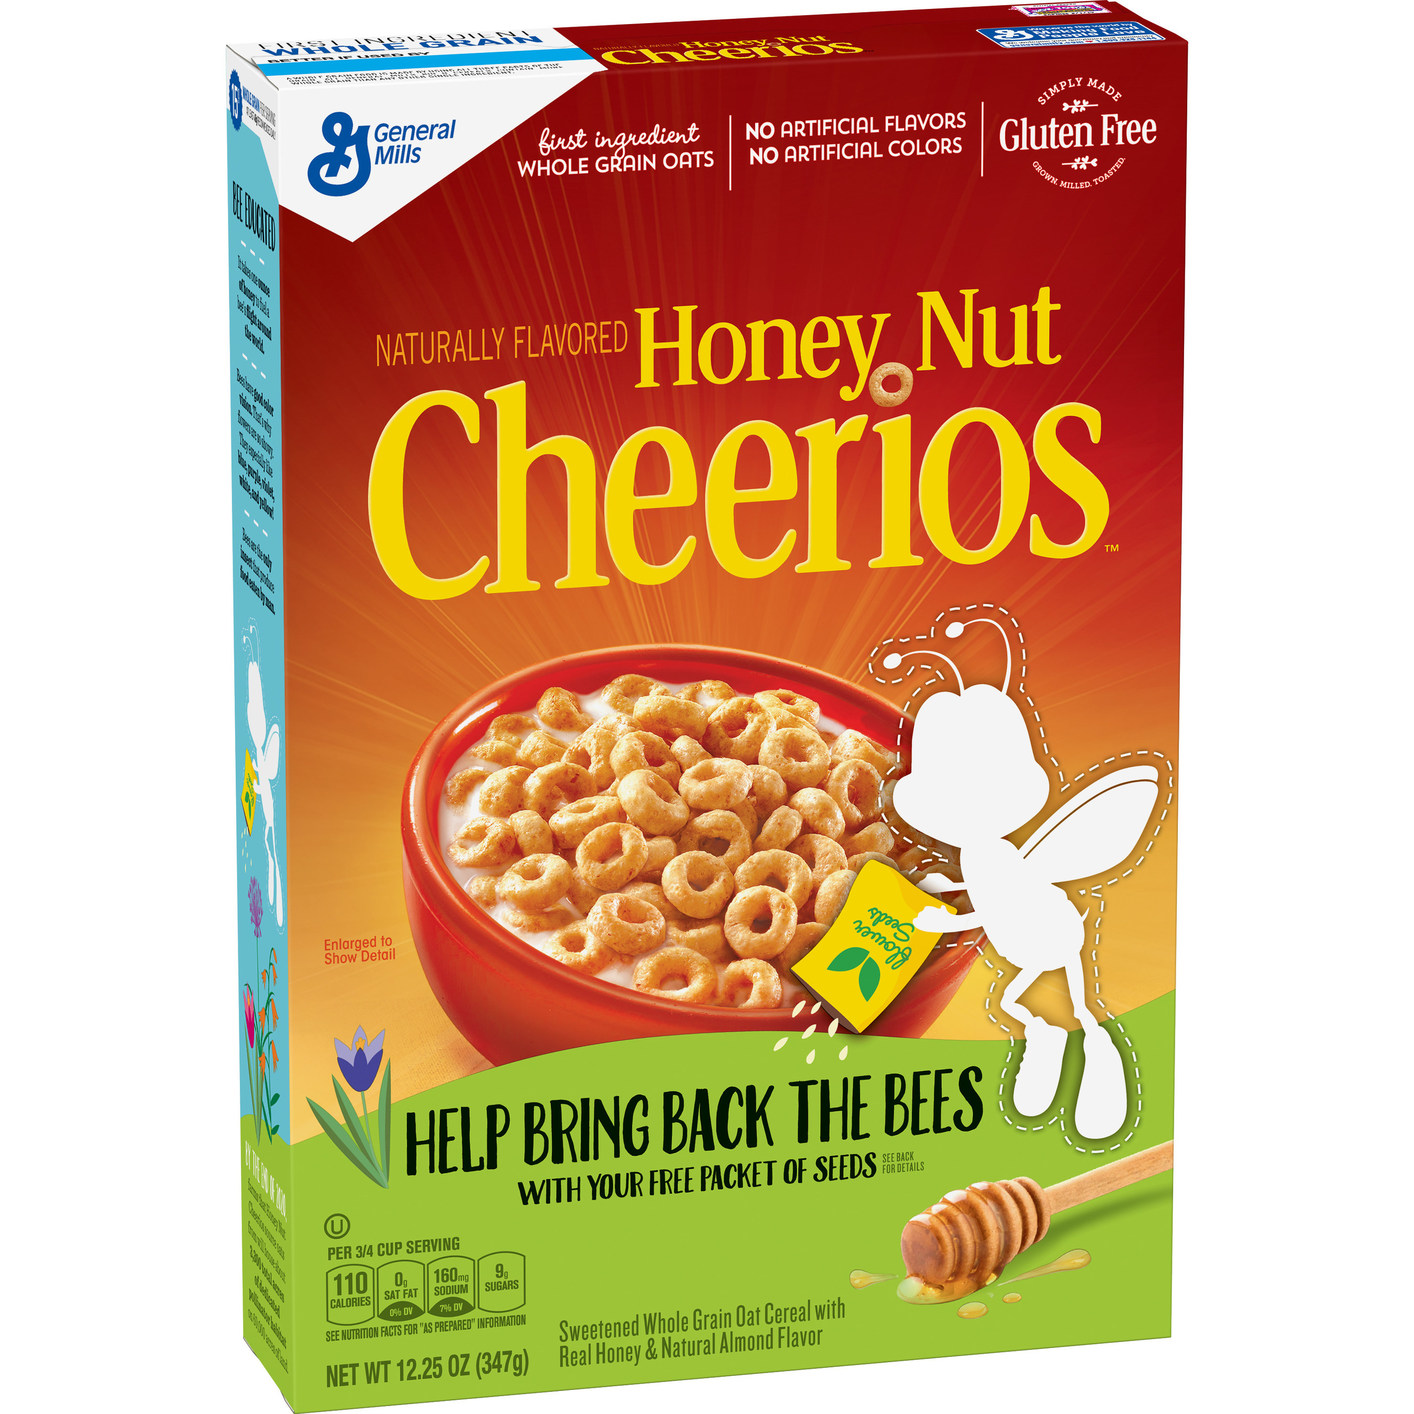 Honey Nut Cheerios #BringBackTheBees box.